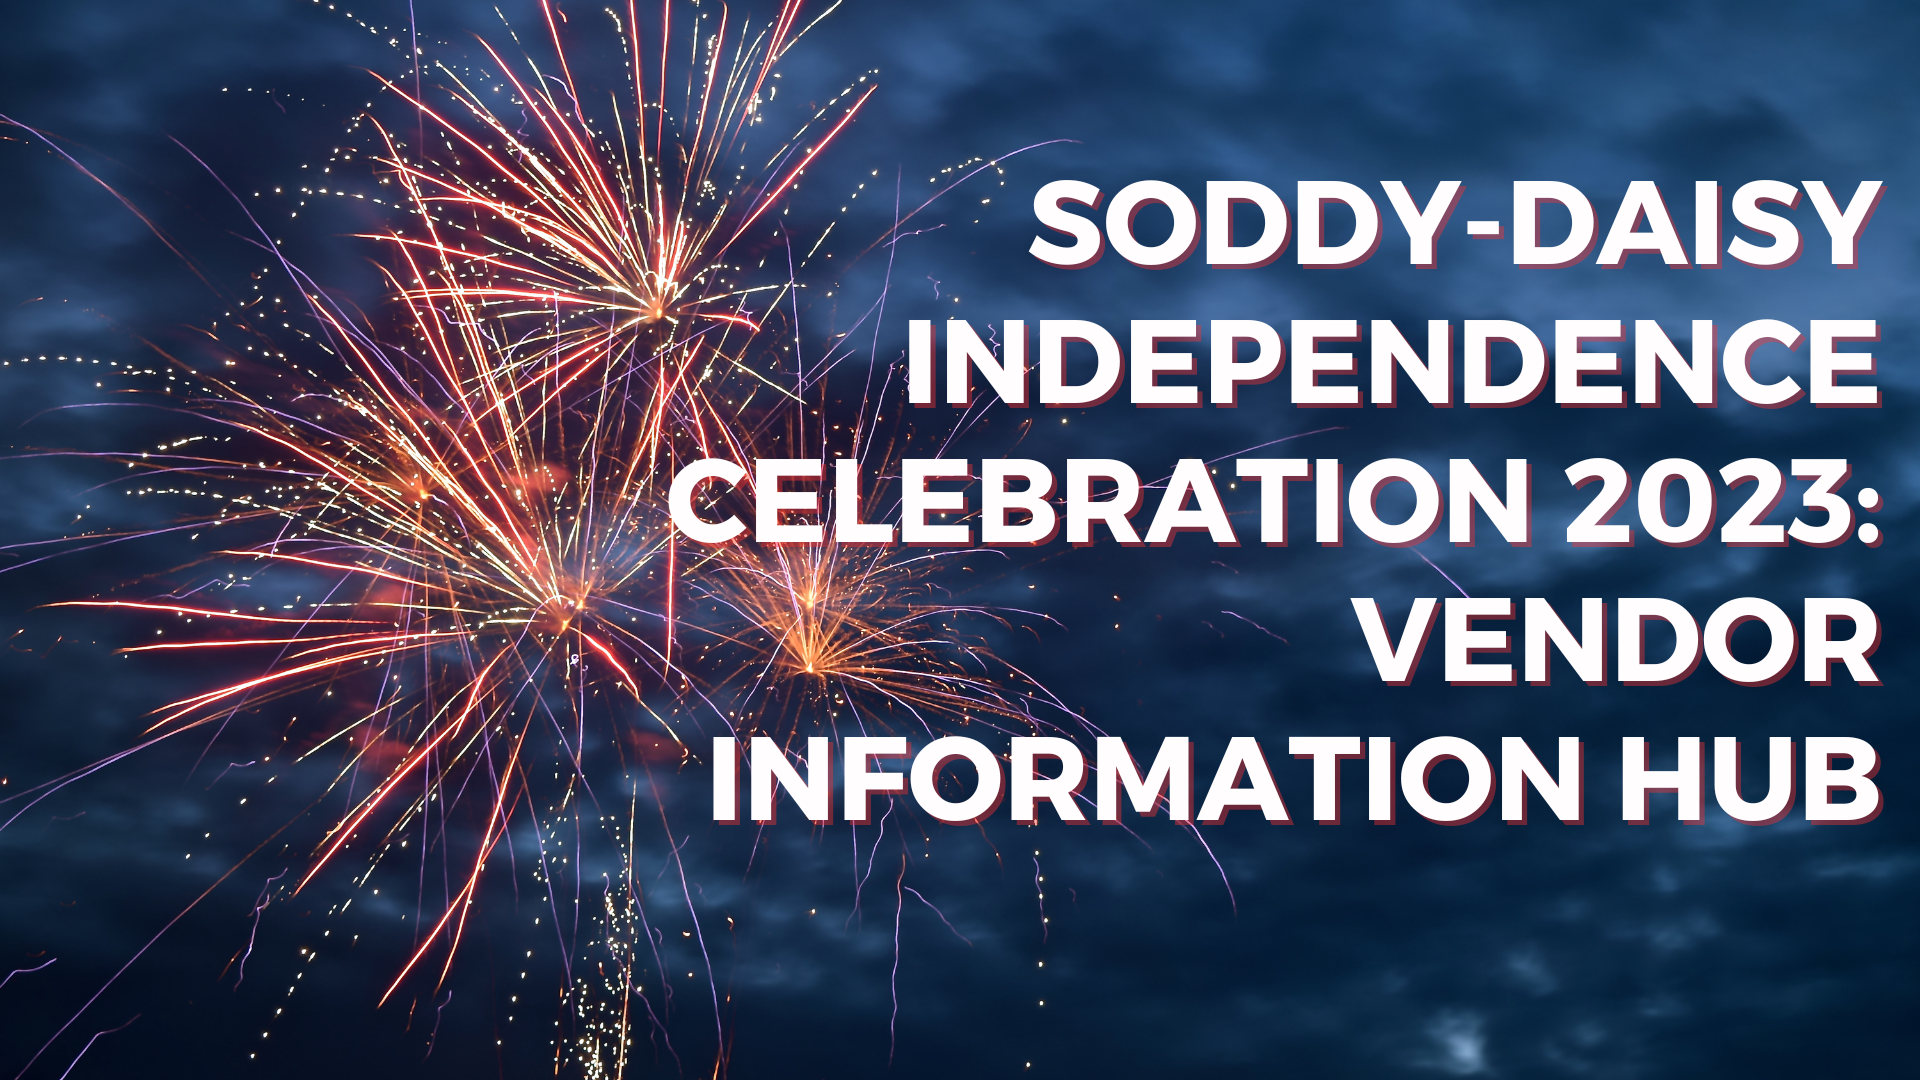 Soddy-Daisy Independence Celebration 2023: Vendor Information Hub